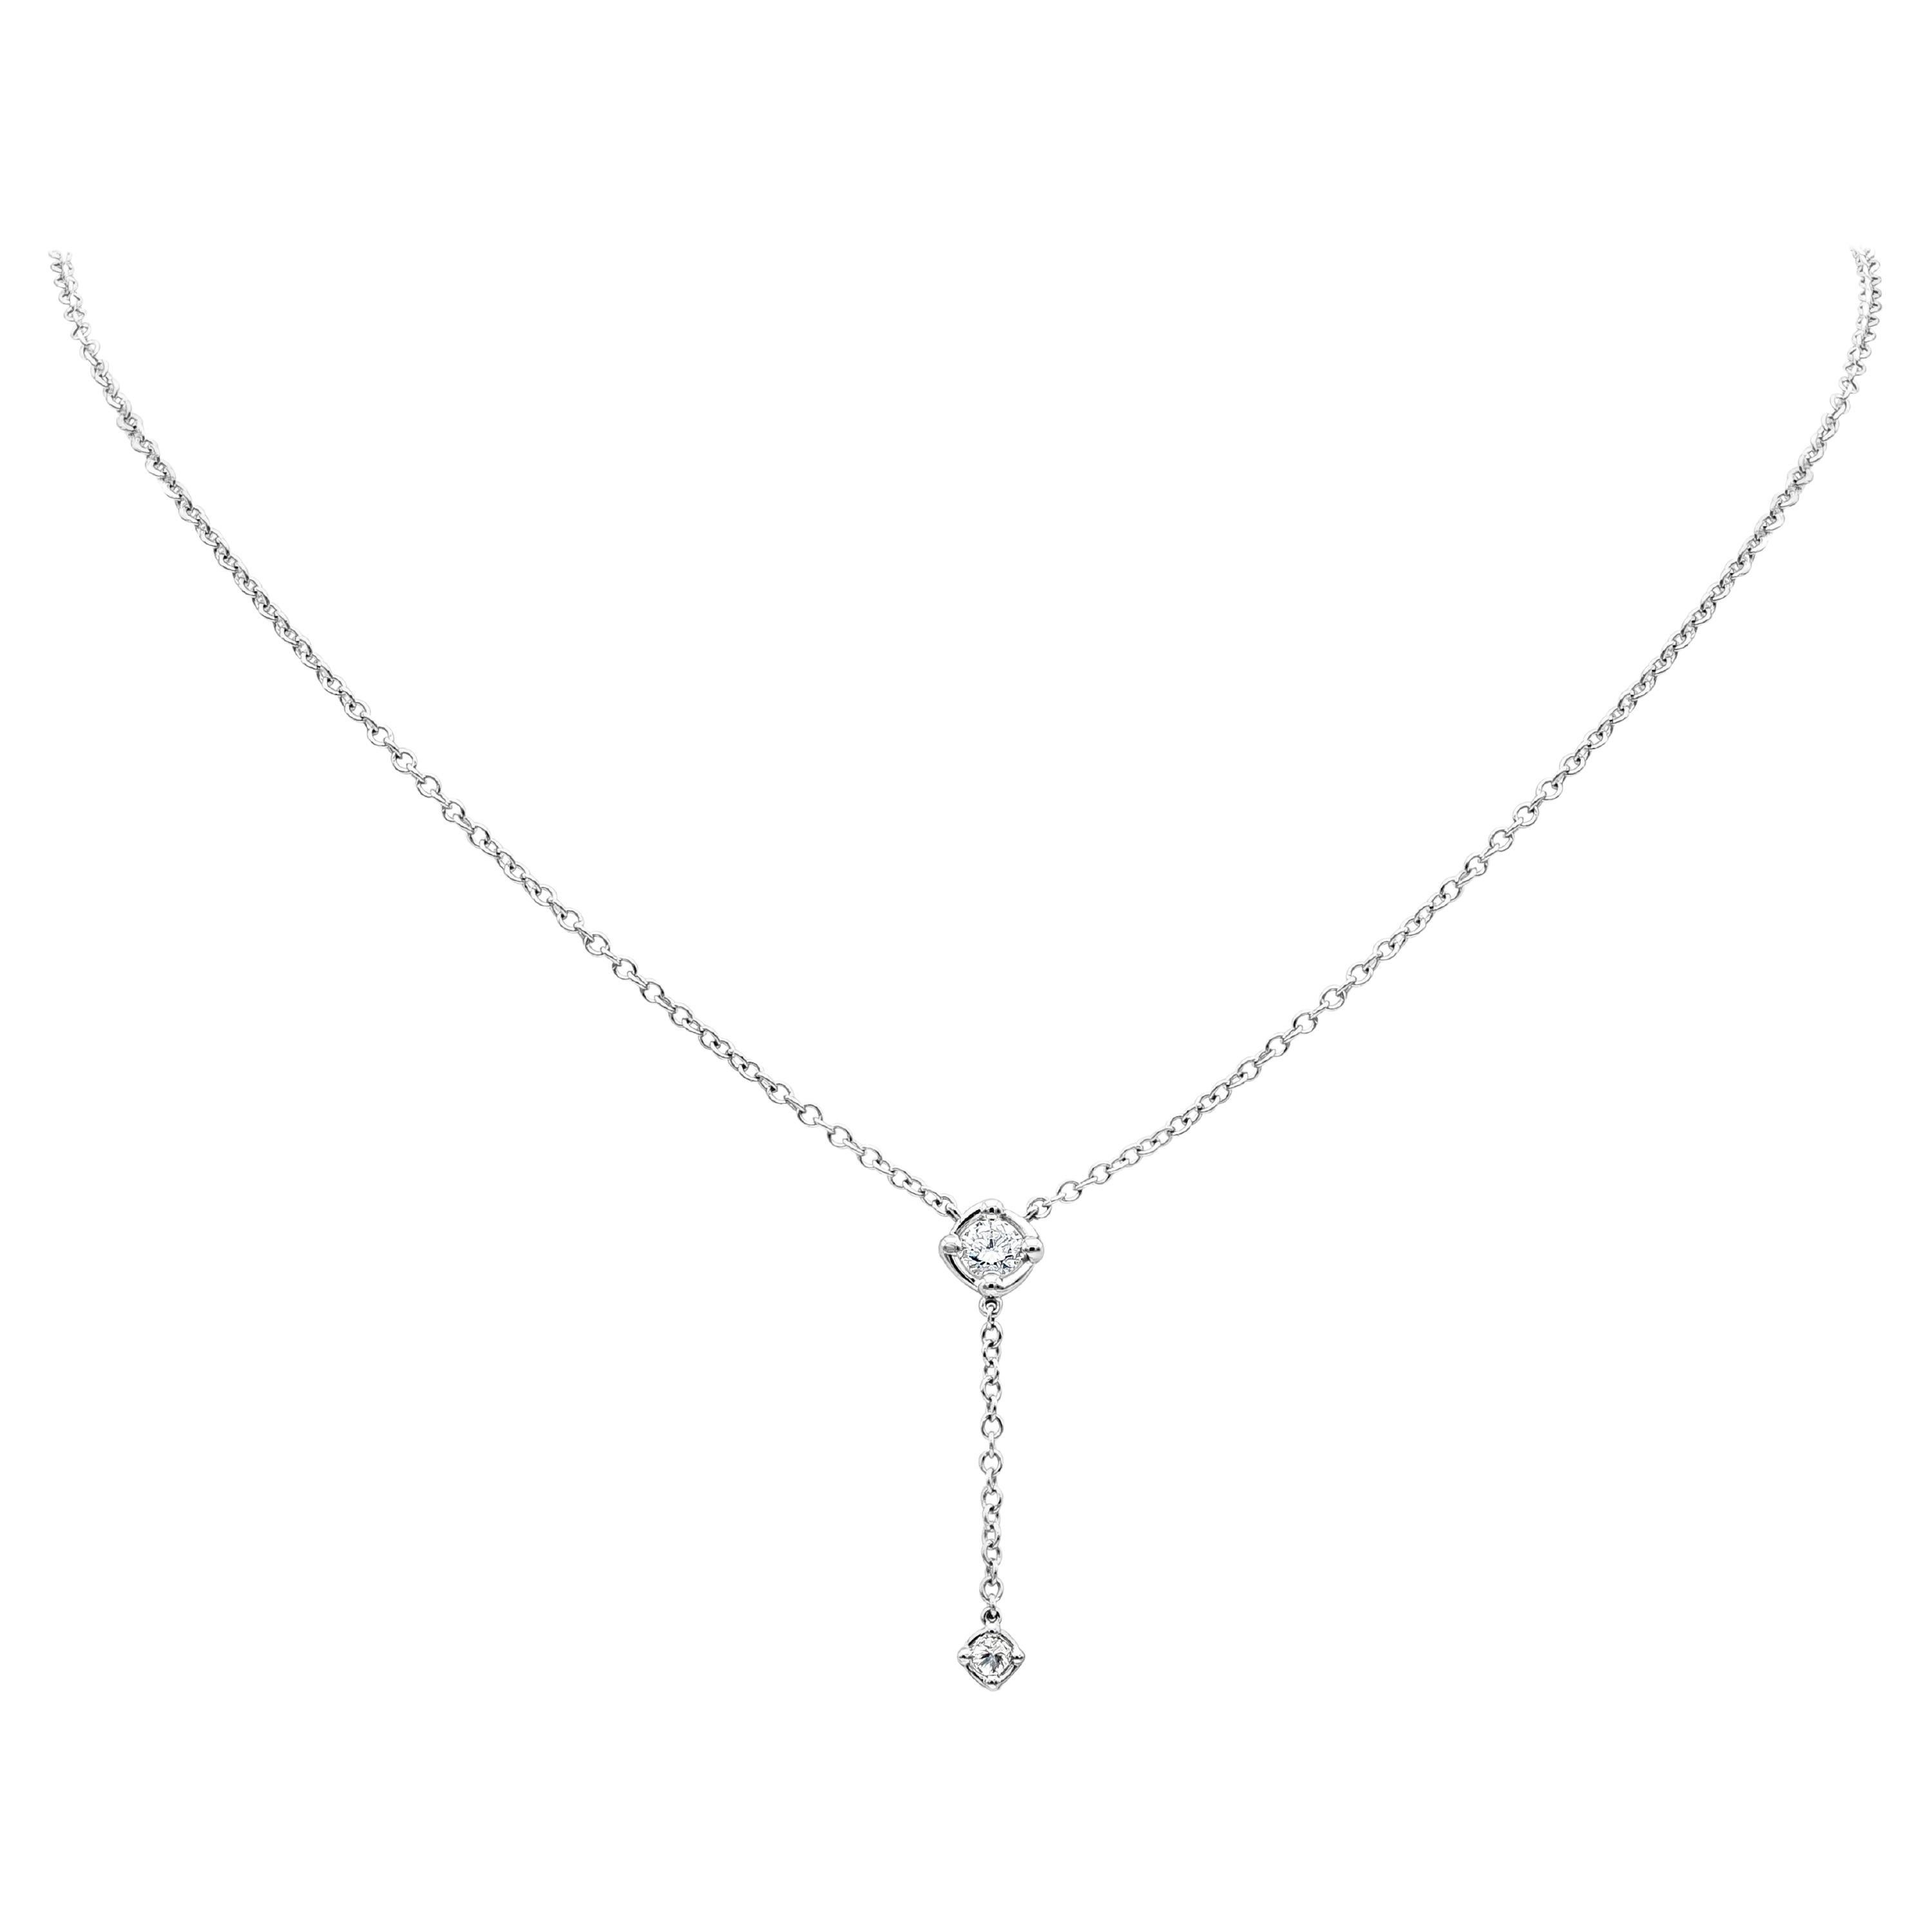 Roman Malakov, collier pendentif en or blanc avec diamants ronds de 0,30 carat